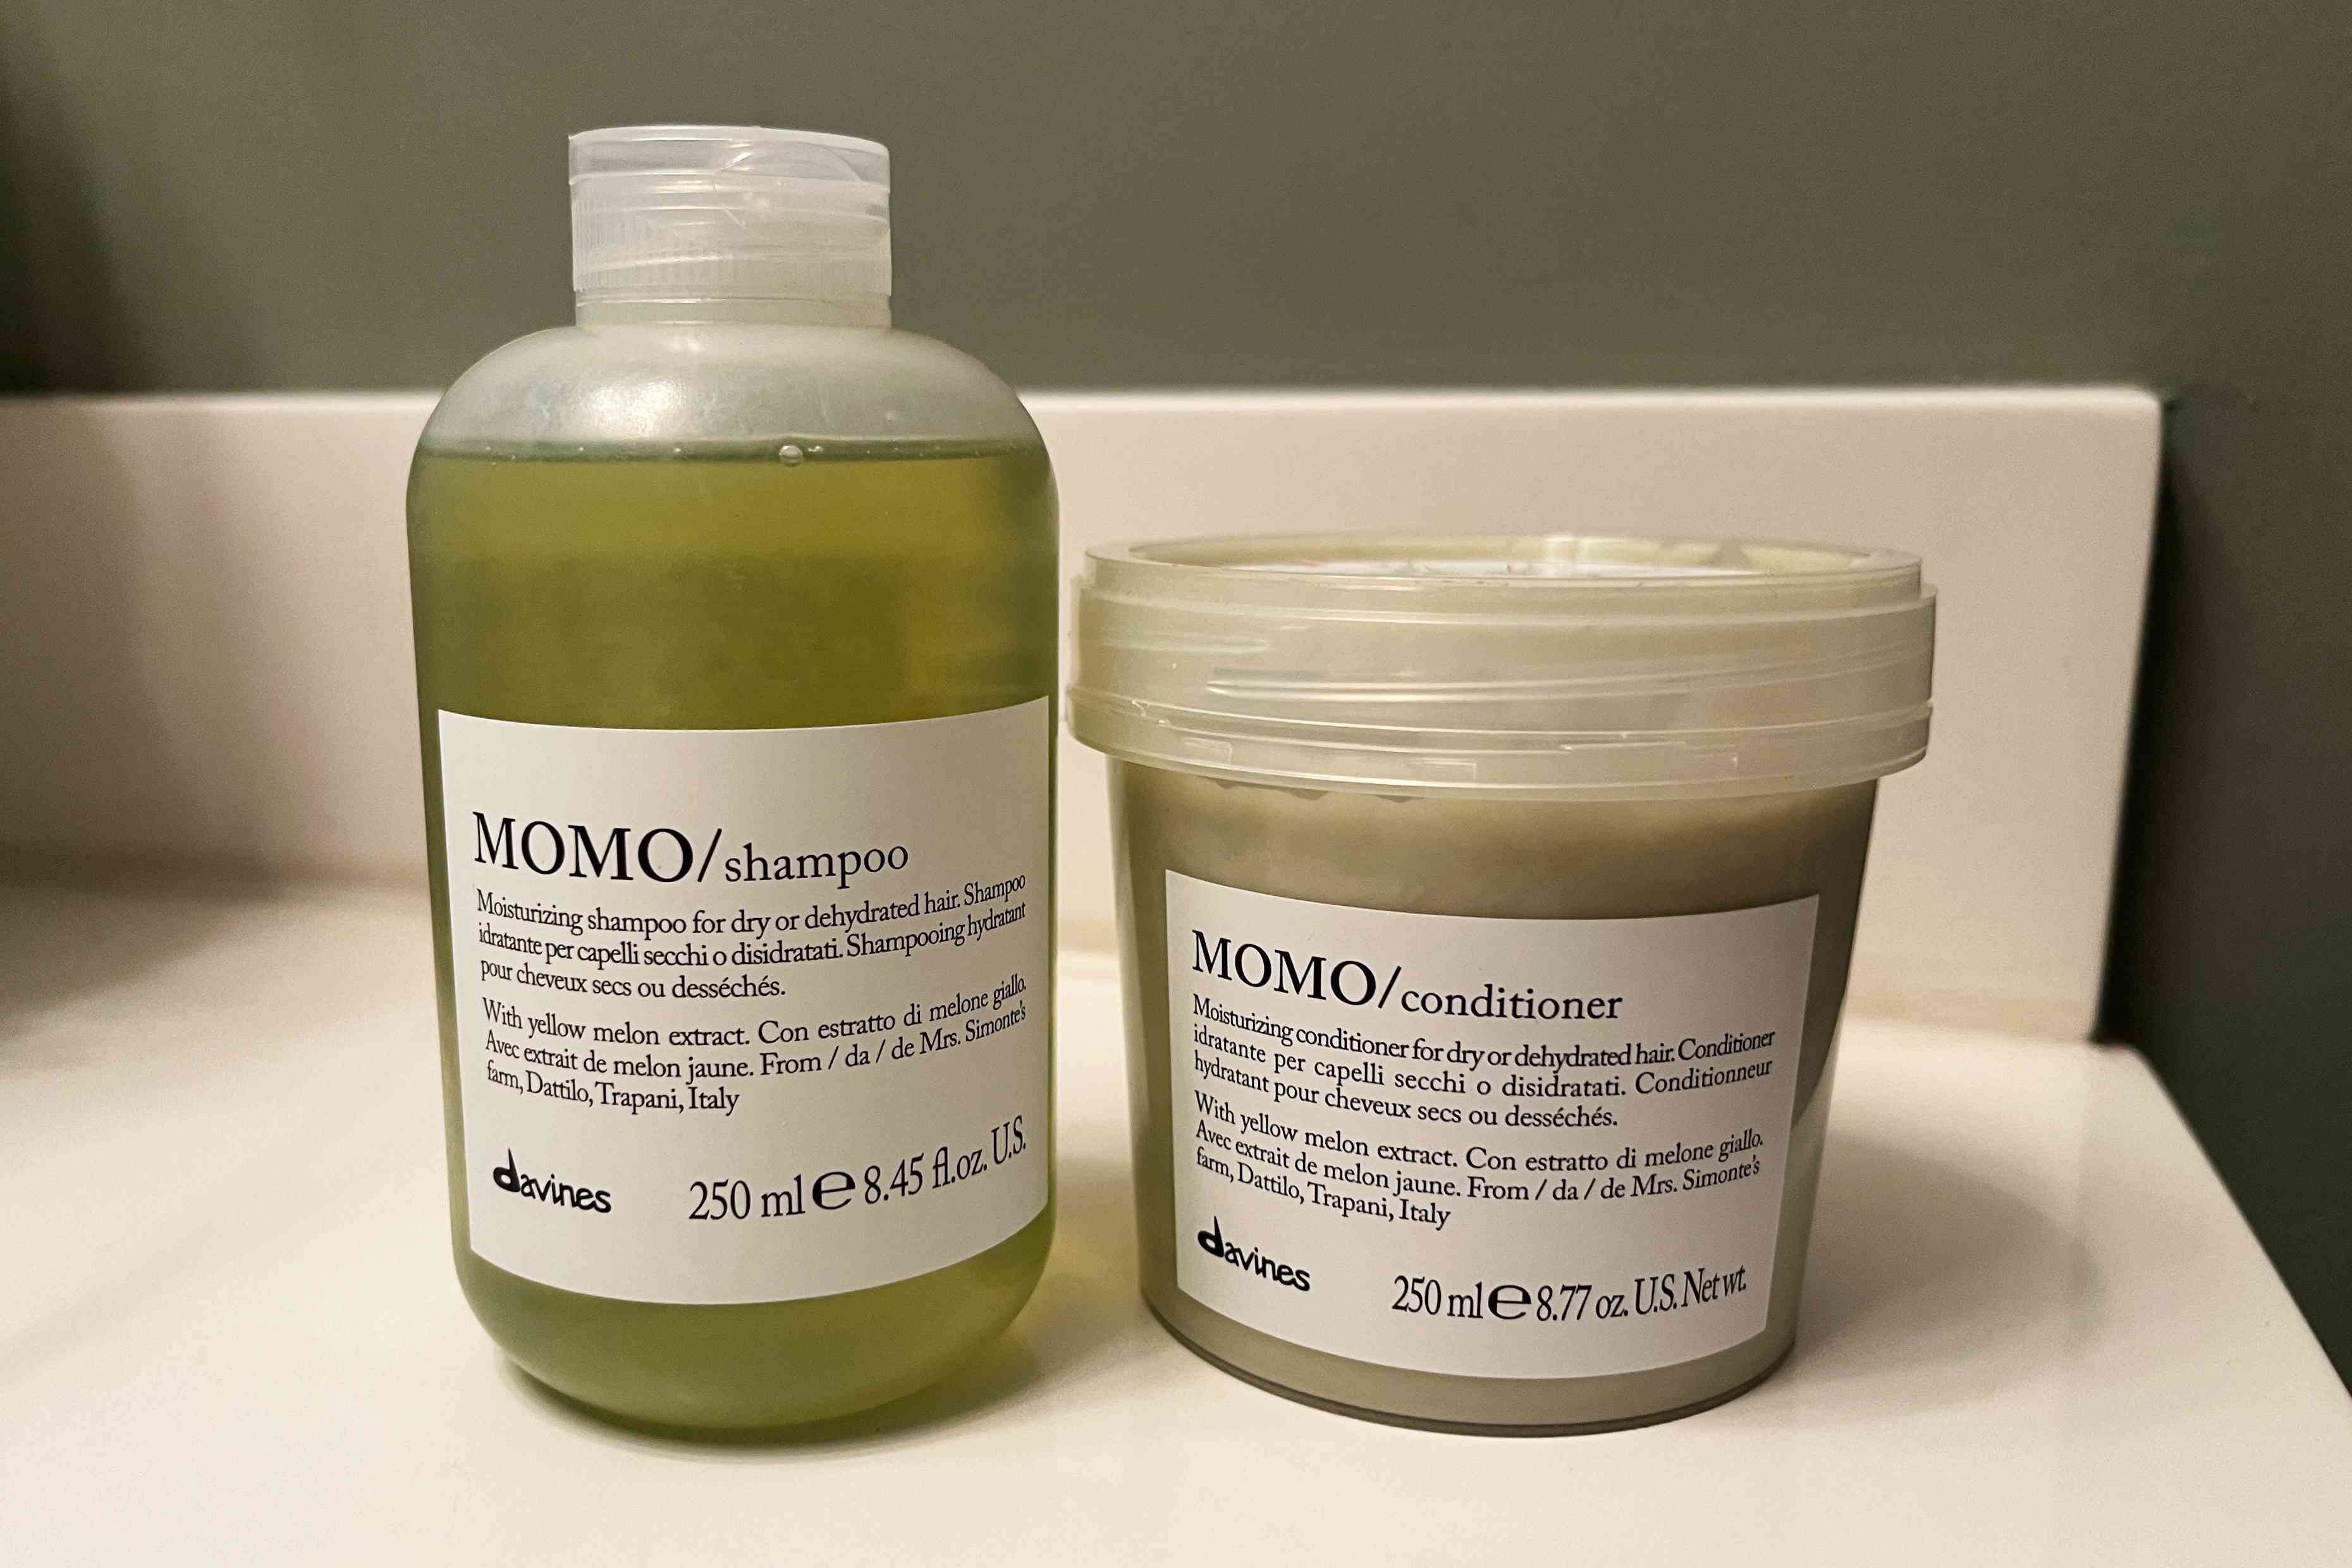 The Davines Momo Moisturizing Shampoo and Conditioner